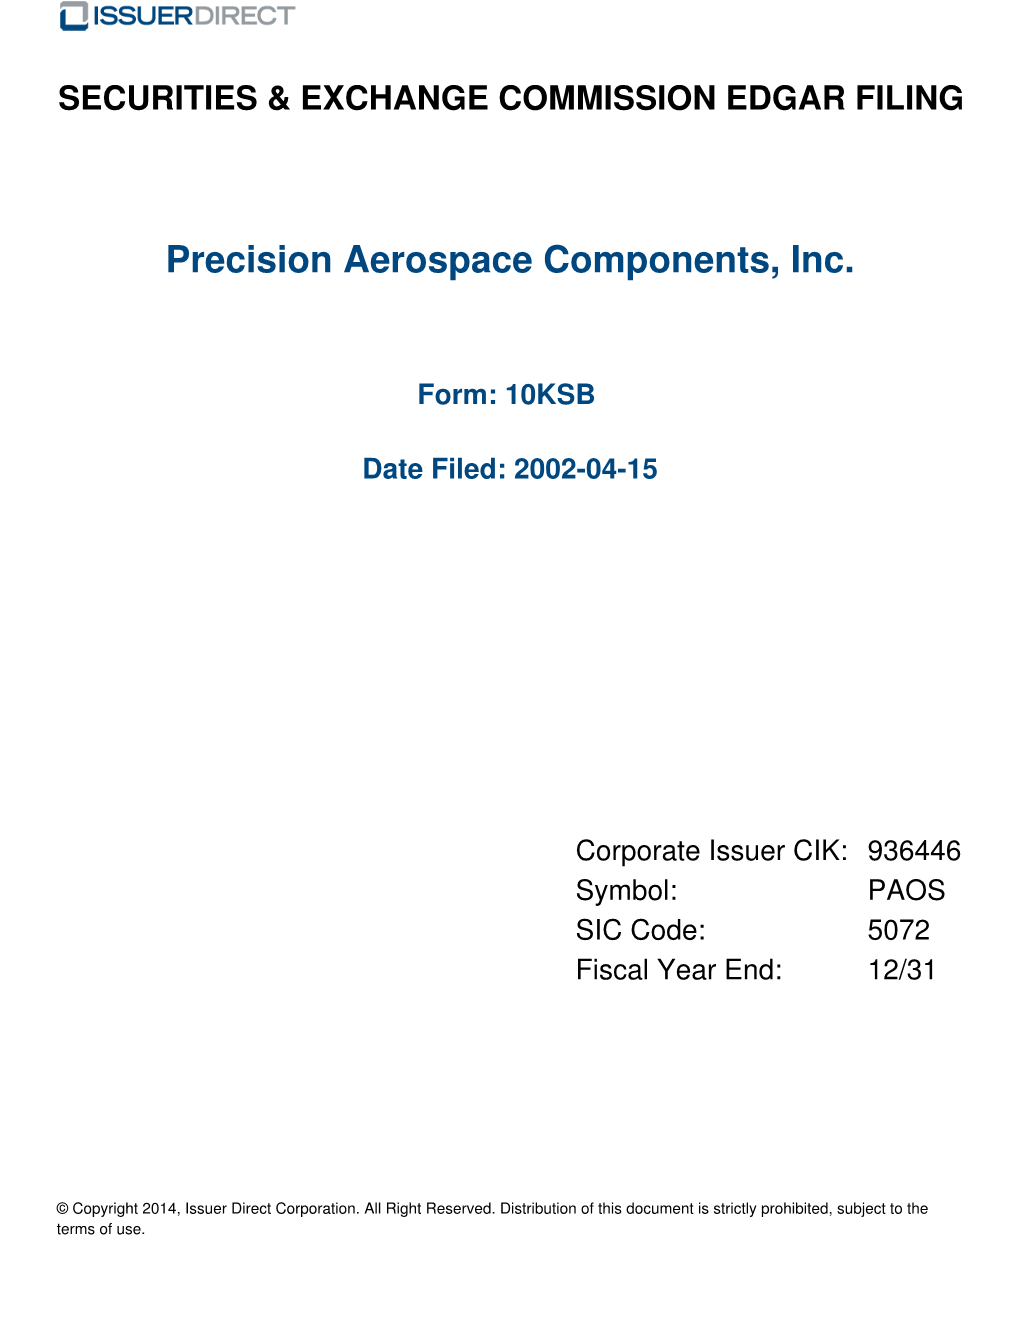 Precision Aerospace Components, Inc